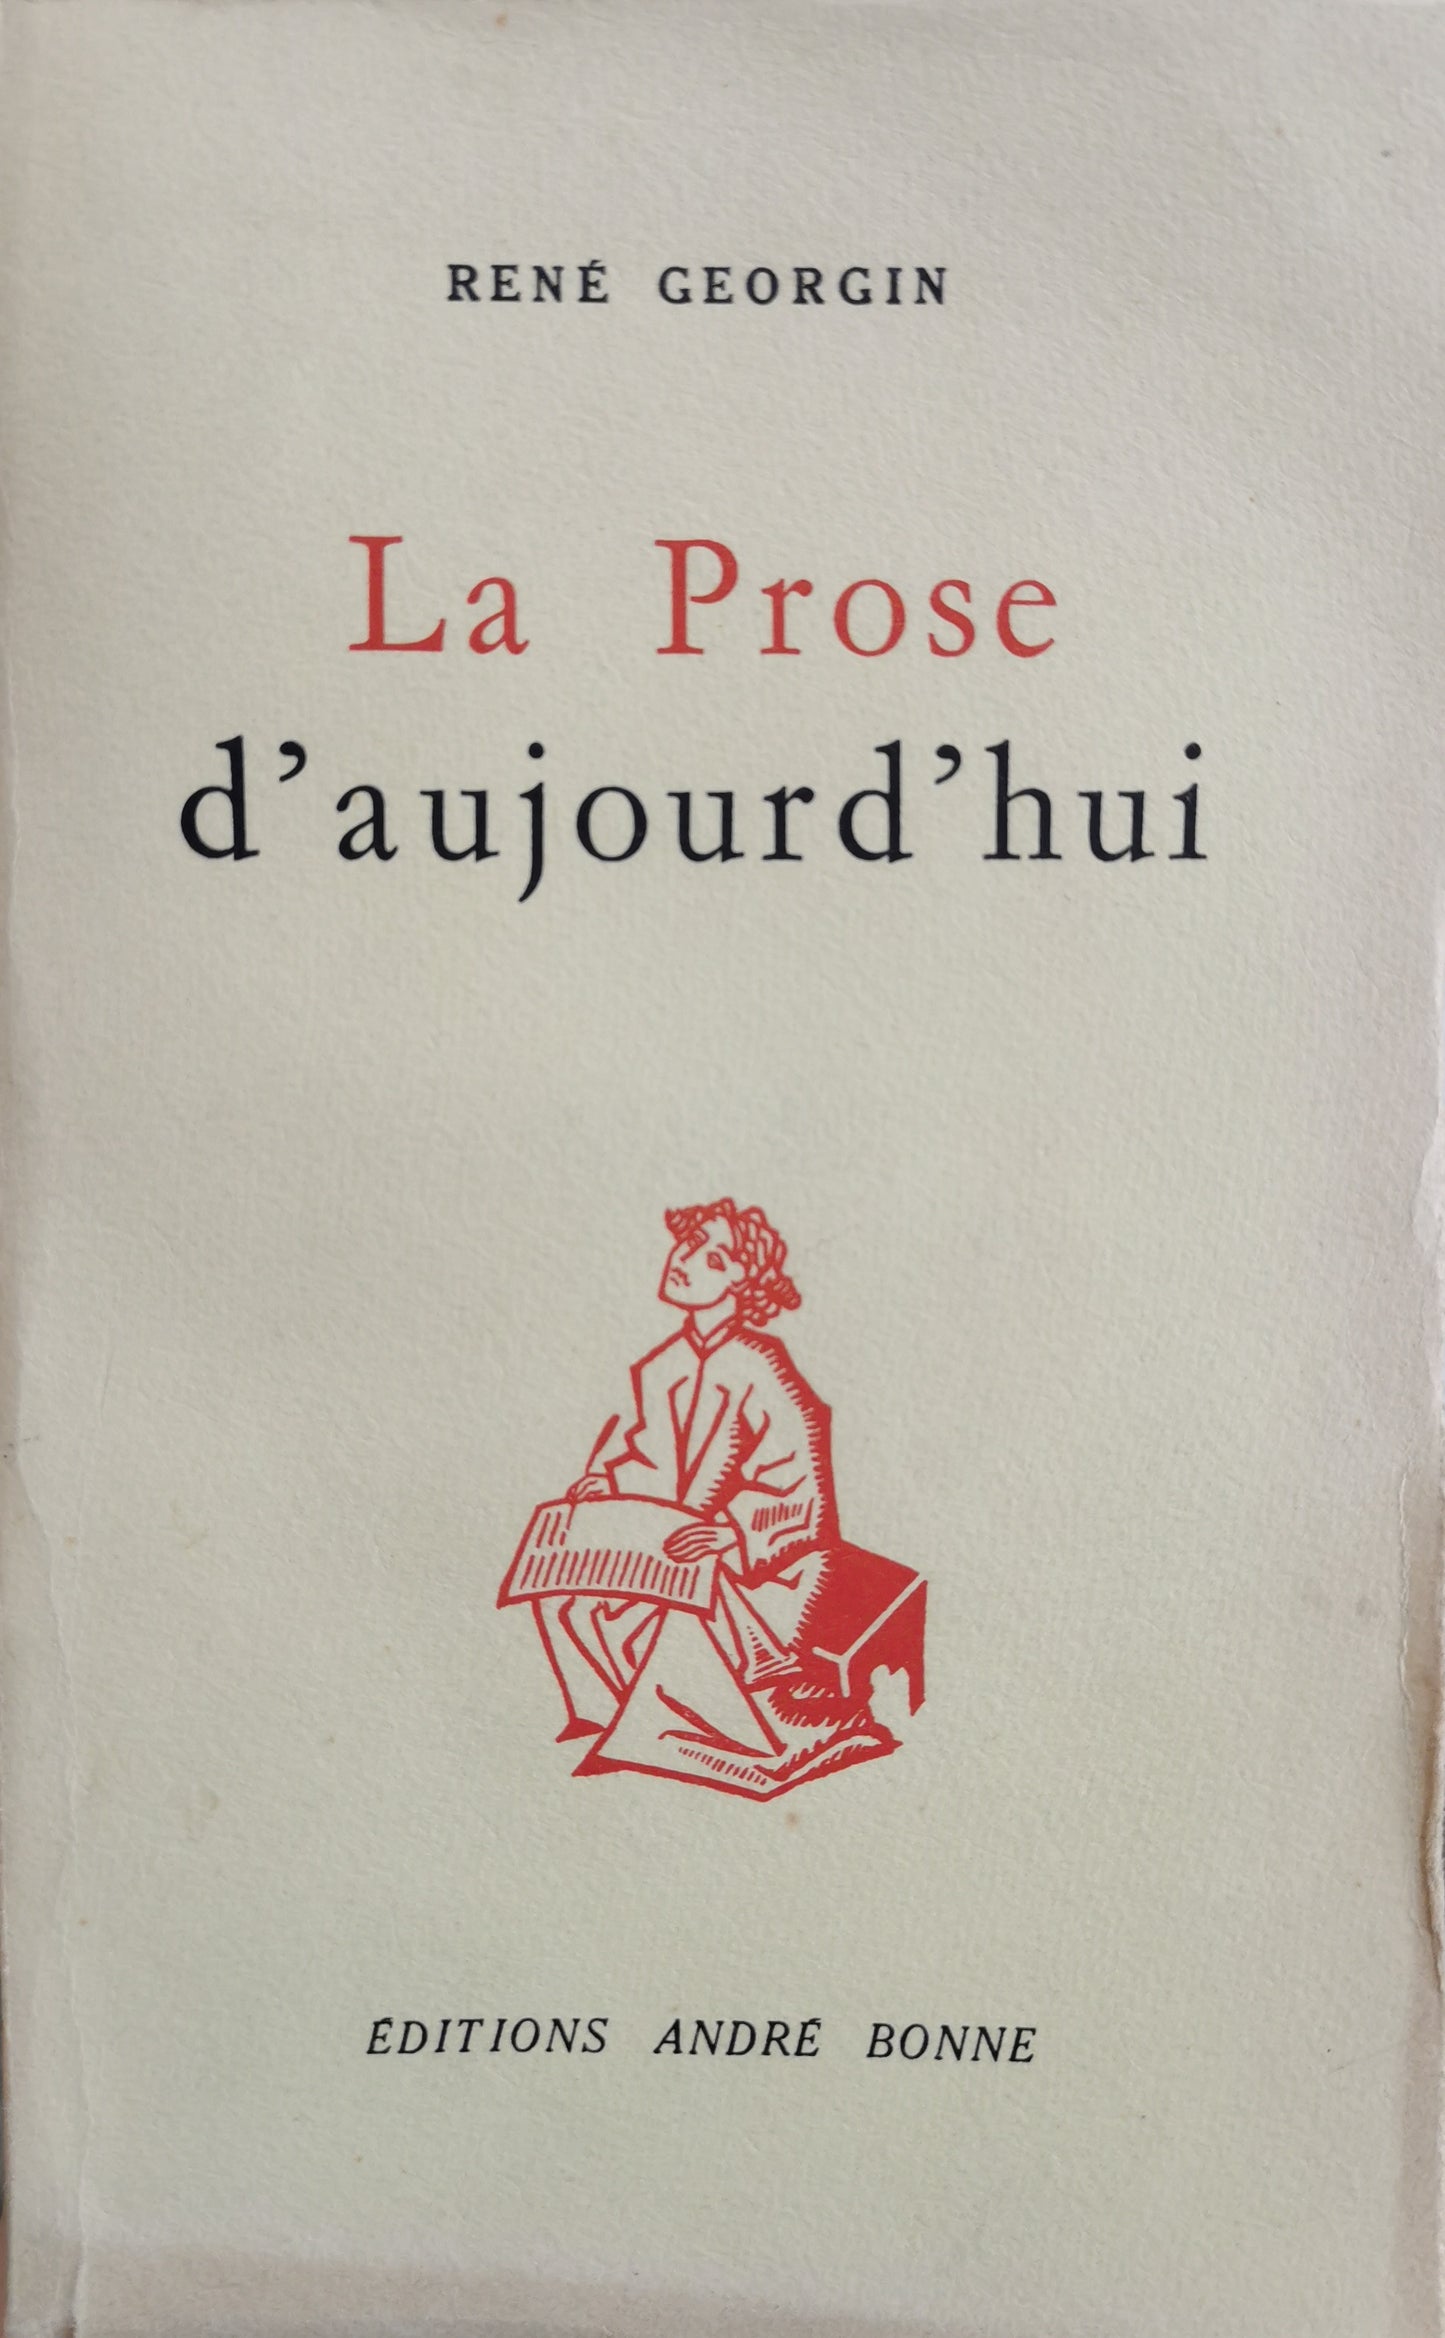 La Prose d'aujourd'hui, René Georgin, ed. André Bonne, 1956.